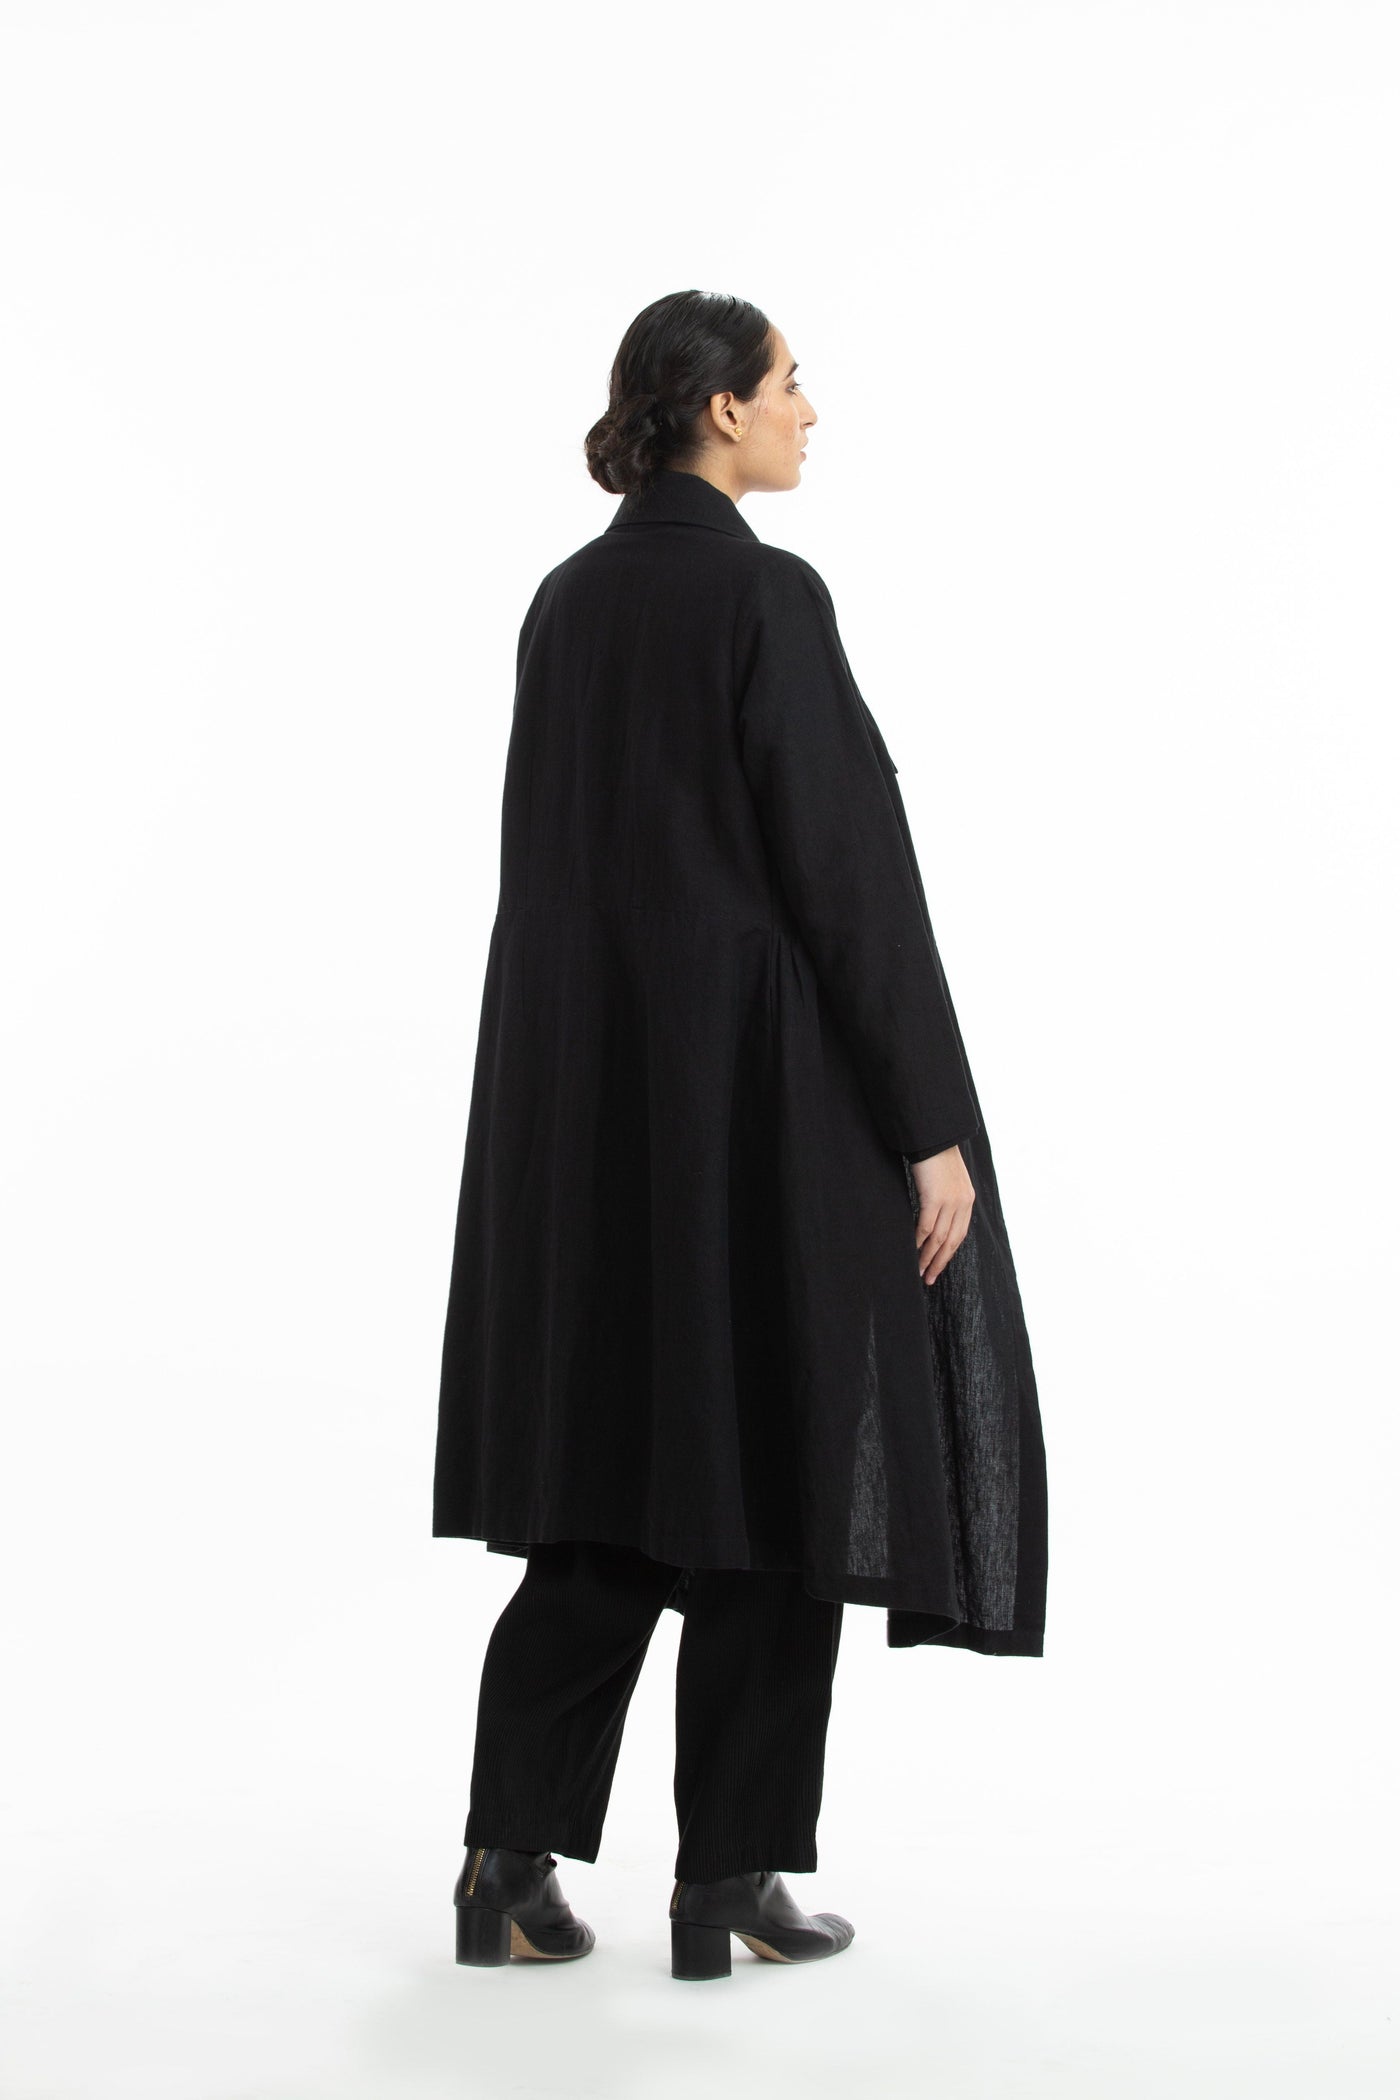 Handwoven Side Gathered Black Long Jacket Fashion Akaaro 